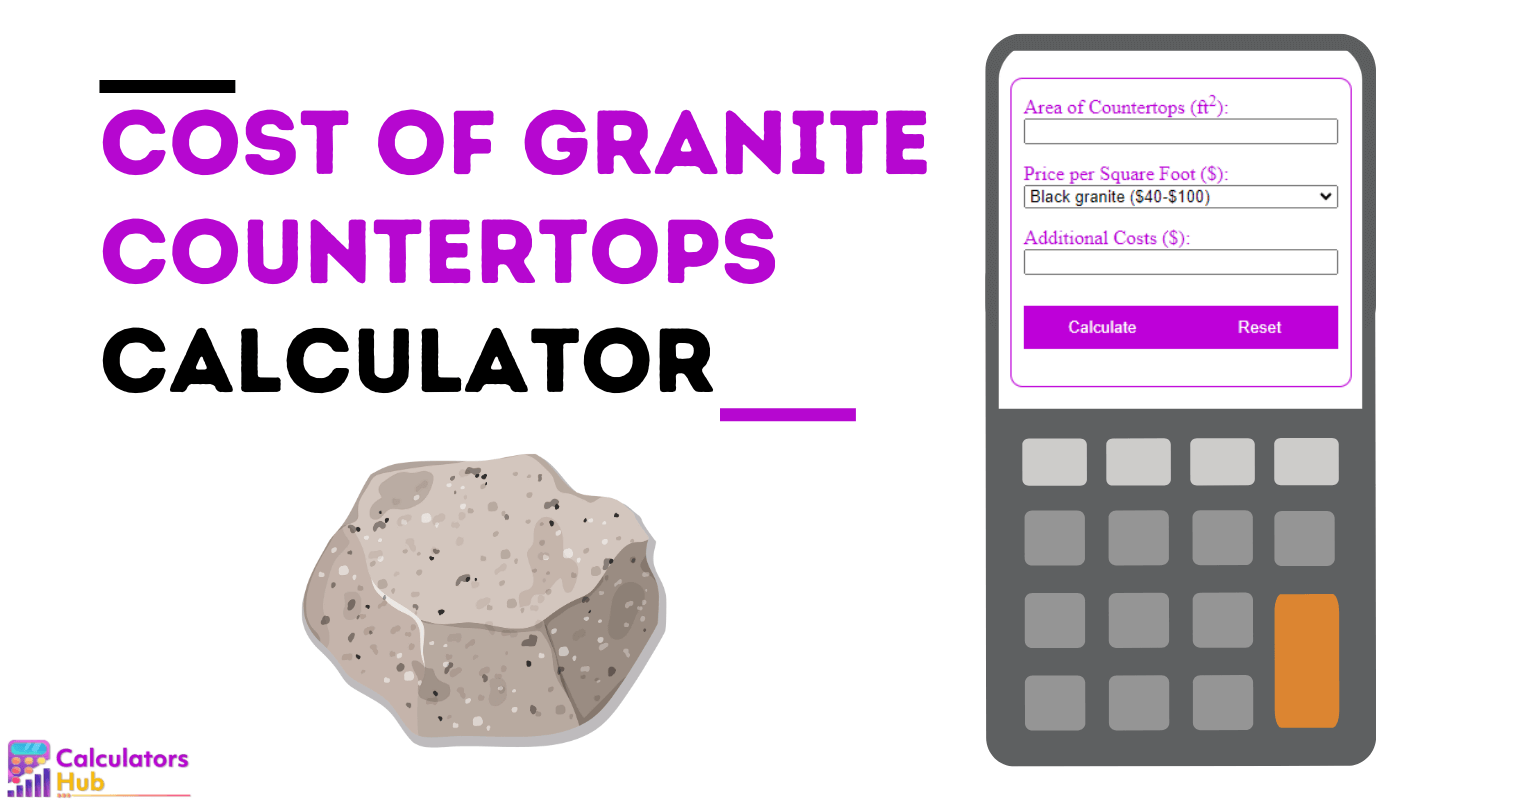 Cost of Granite Countertops Calculator